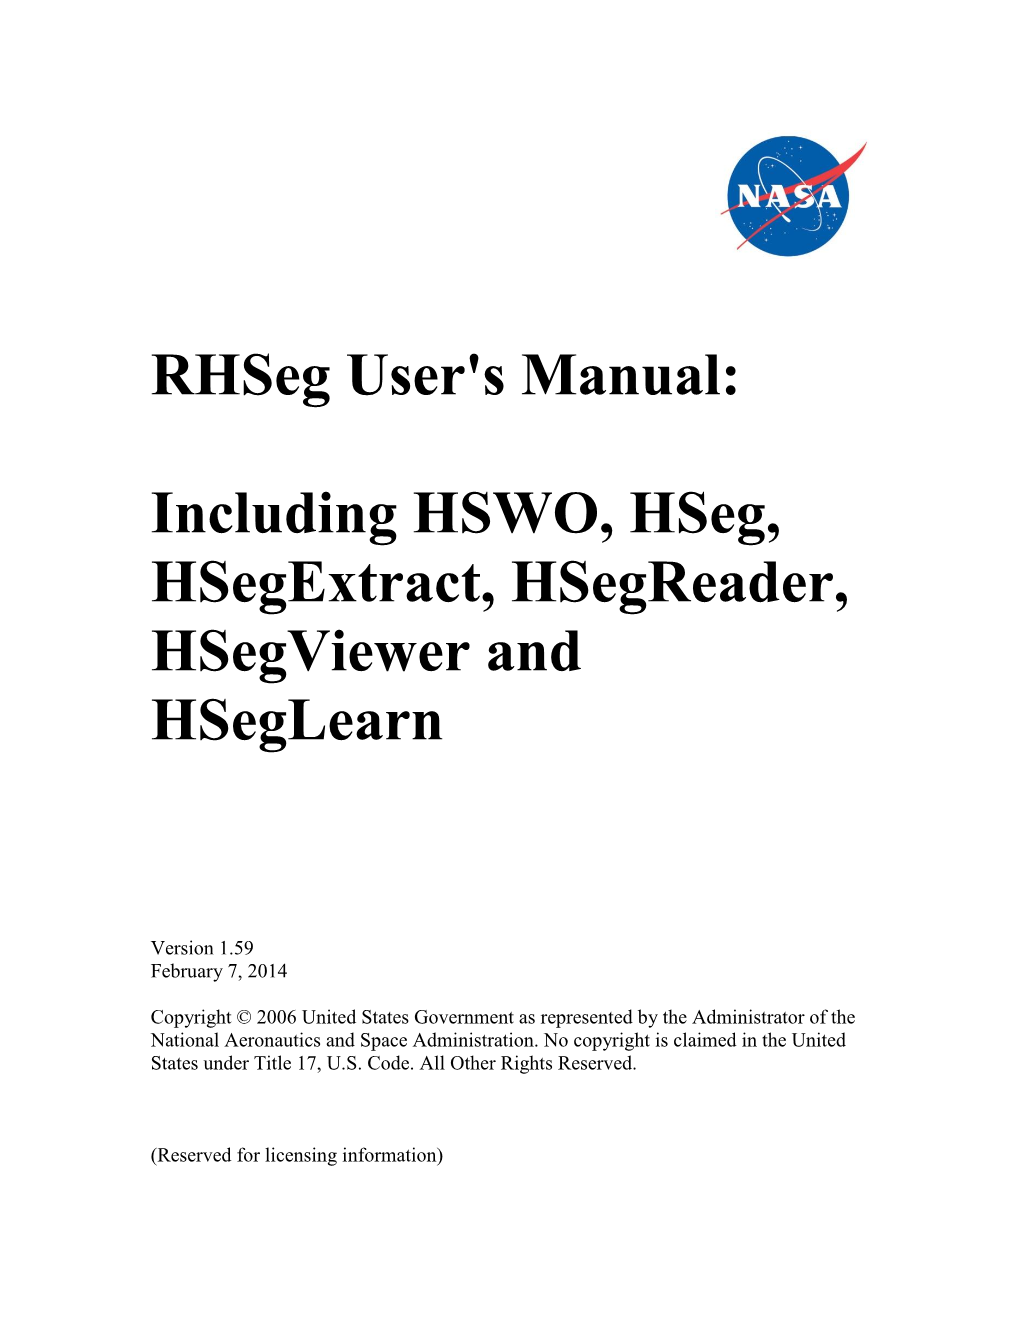 Rhseg User's Manual